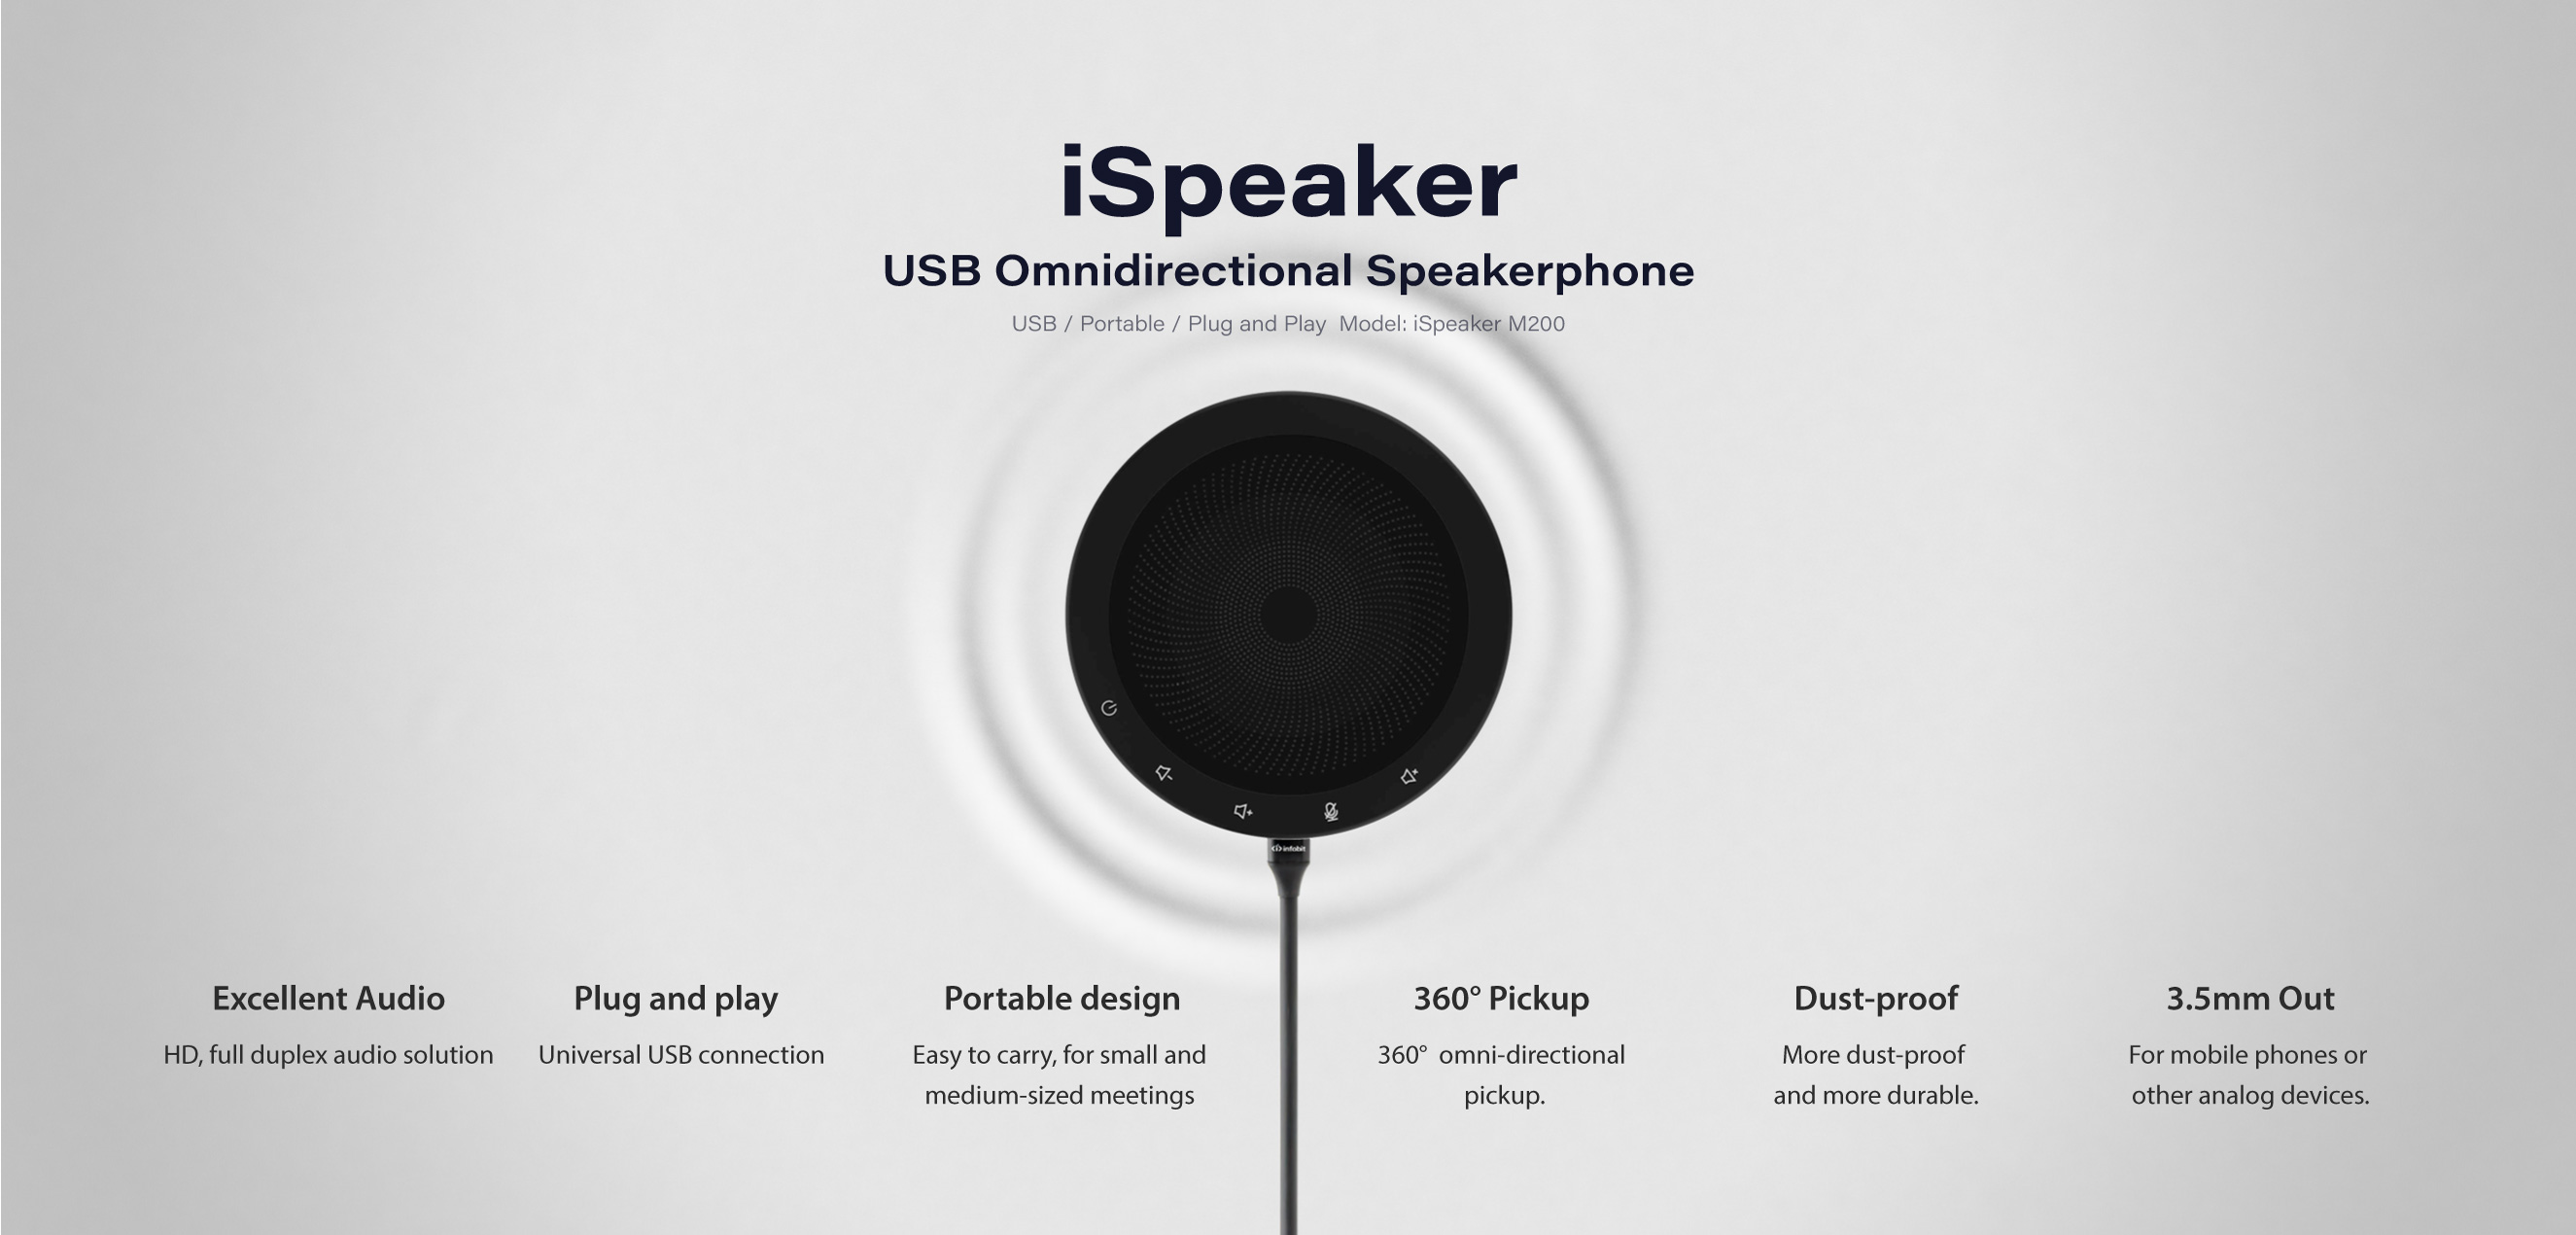 iSpeaker M200: USB Omnidirectional Speakerphone